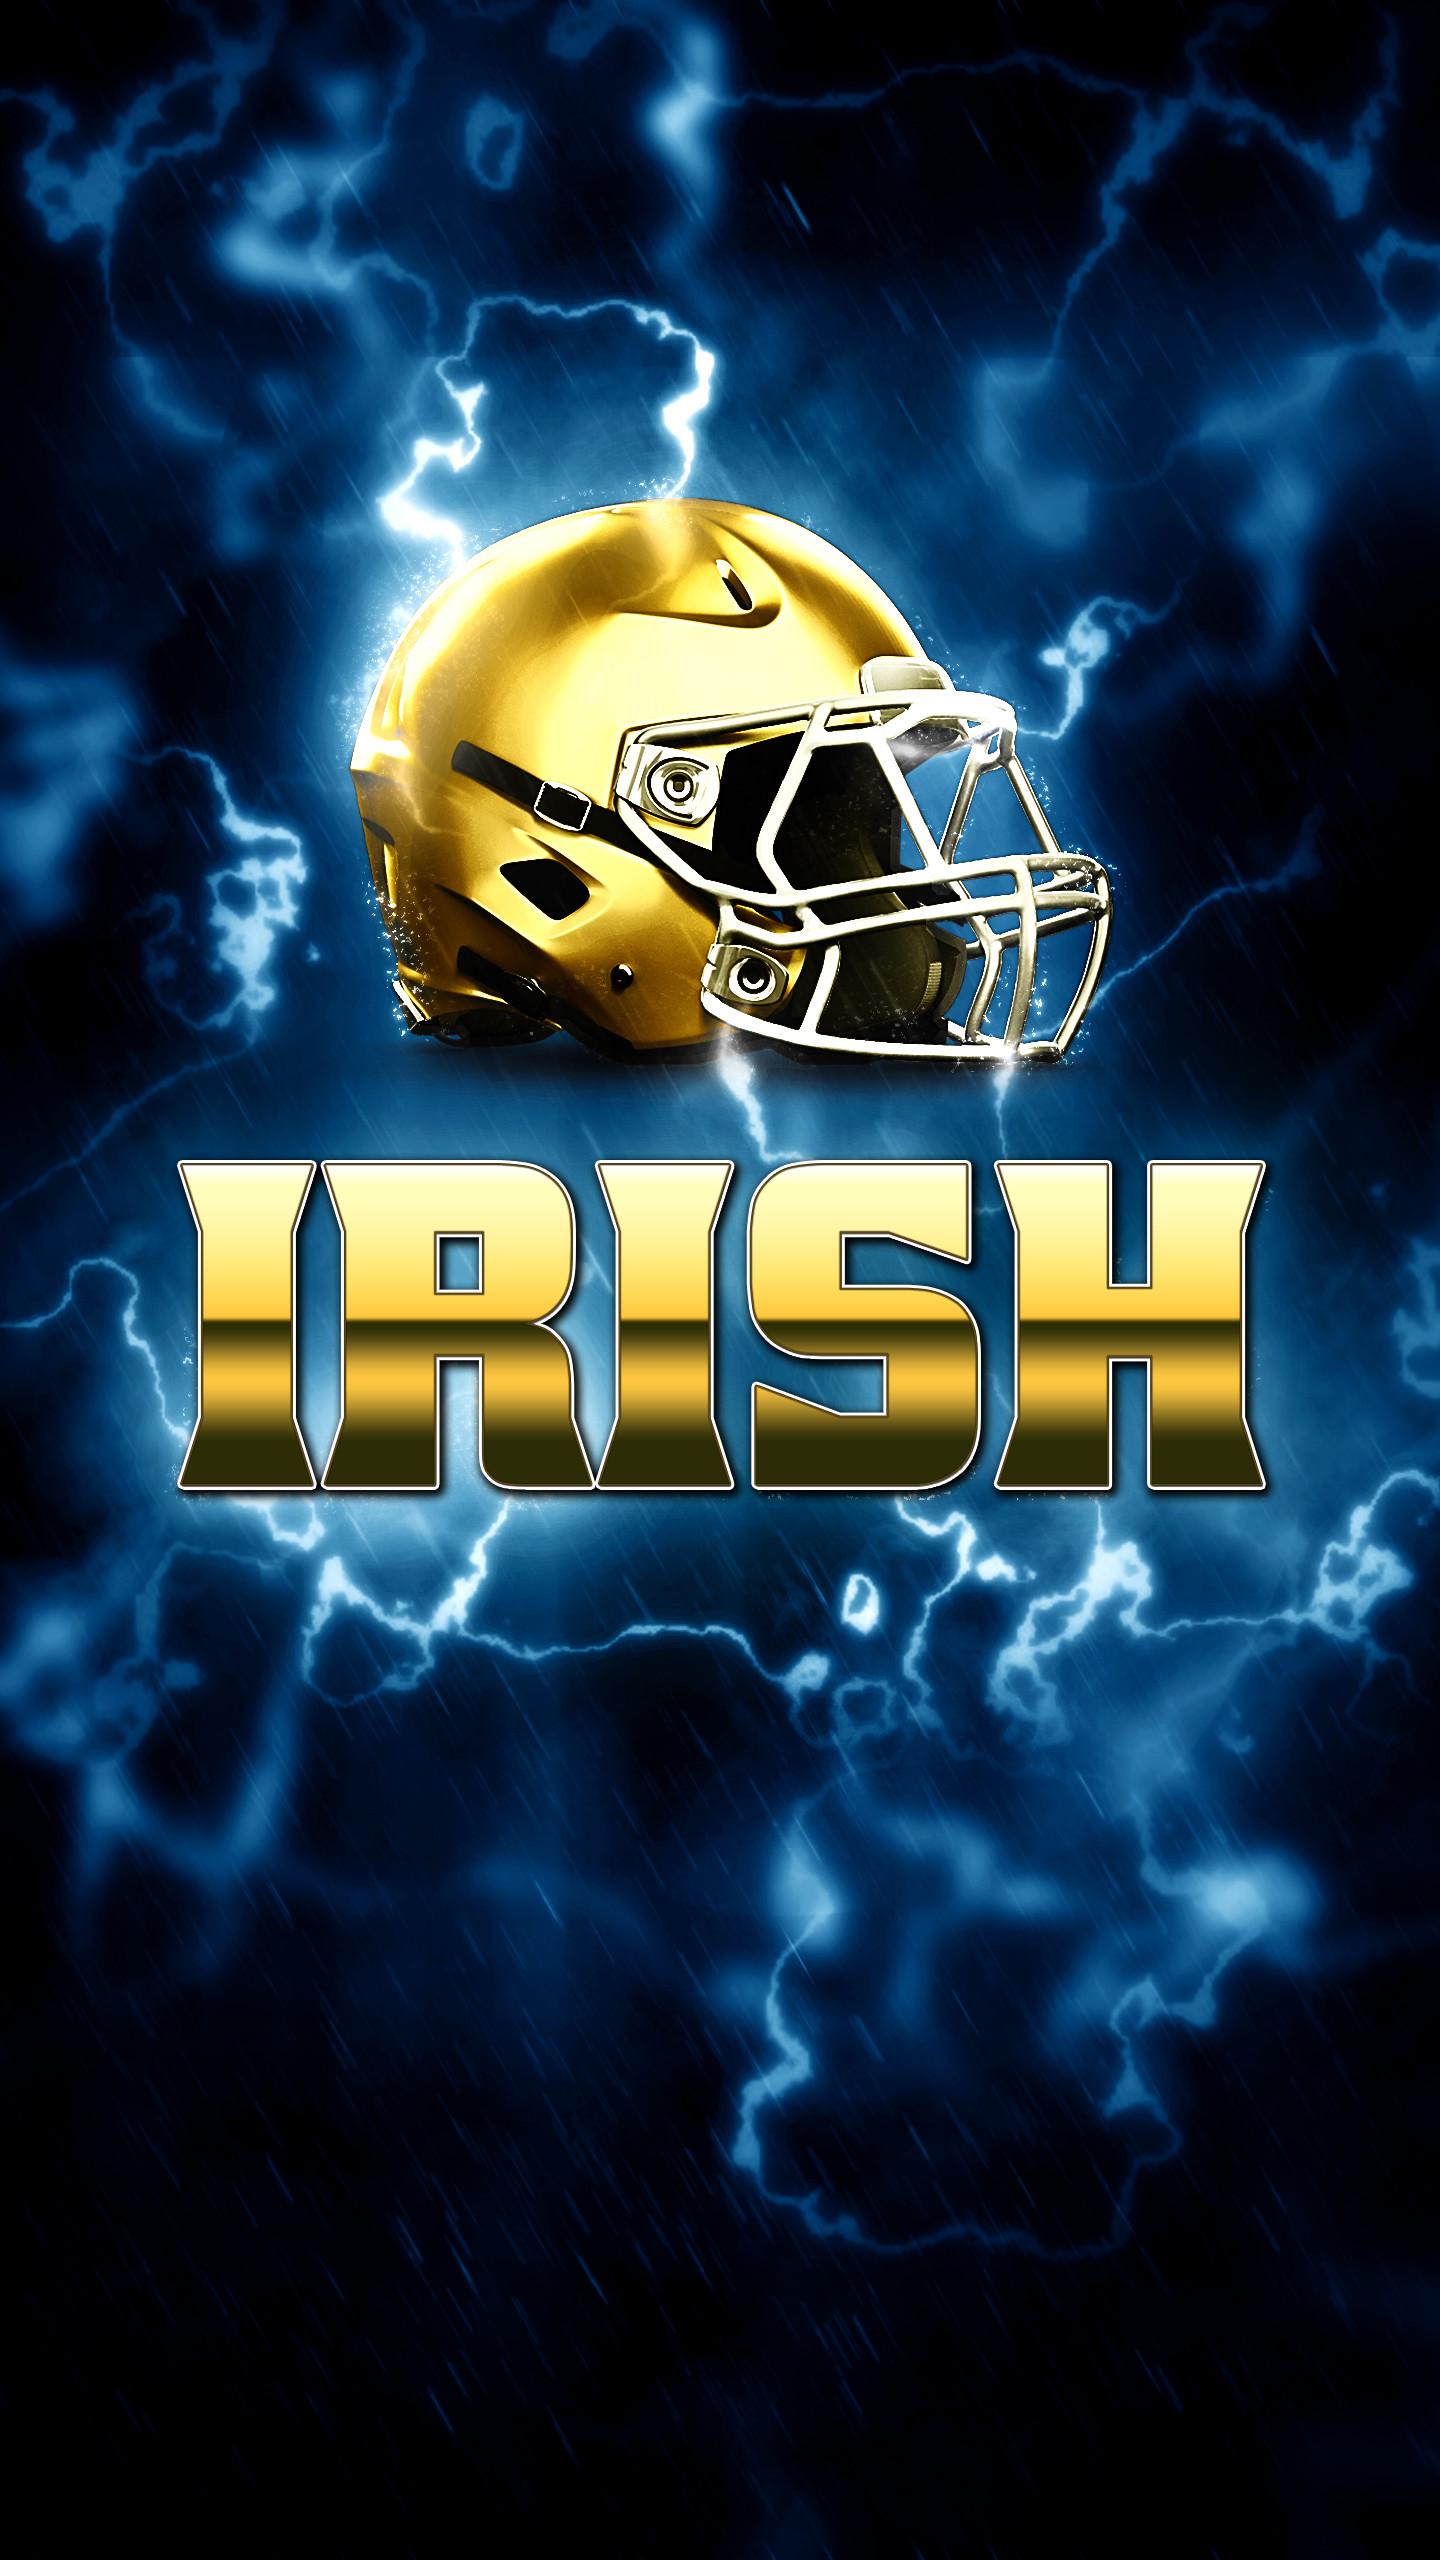 Notre Dame Football iPhone Wallpaper